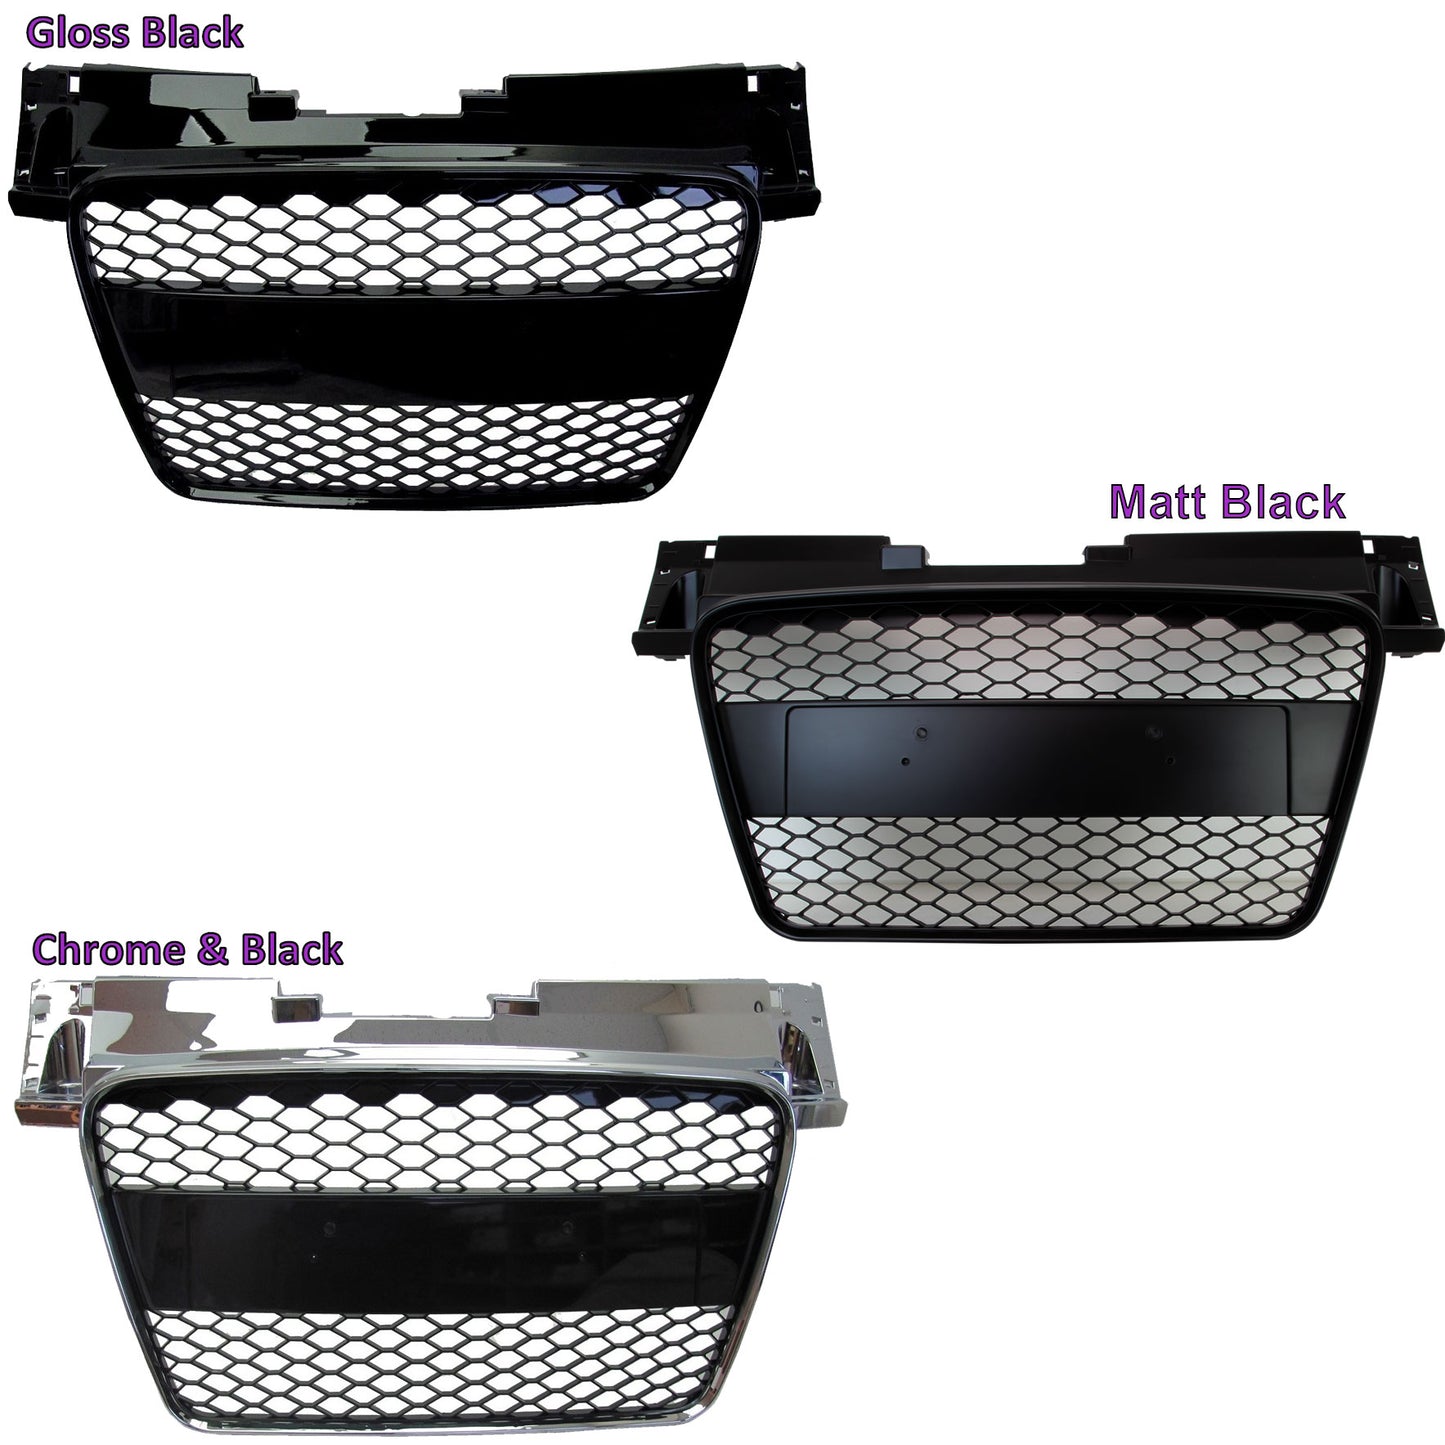 TTRS style conversion front grille for Audi TT - Black